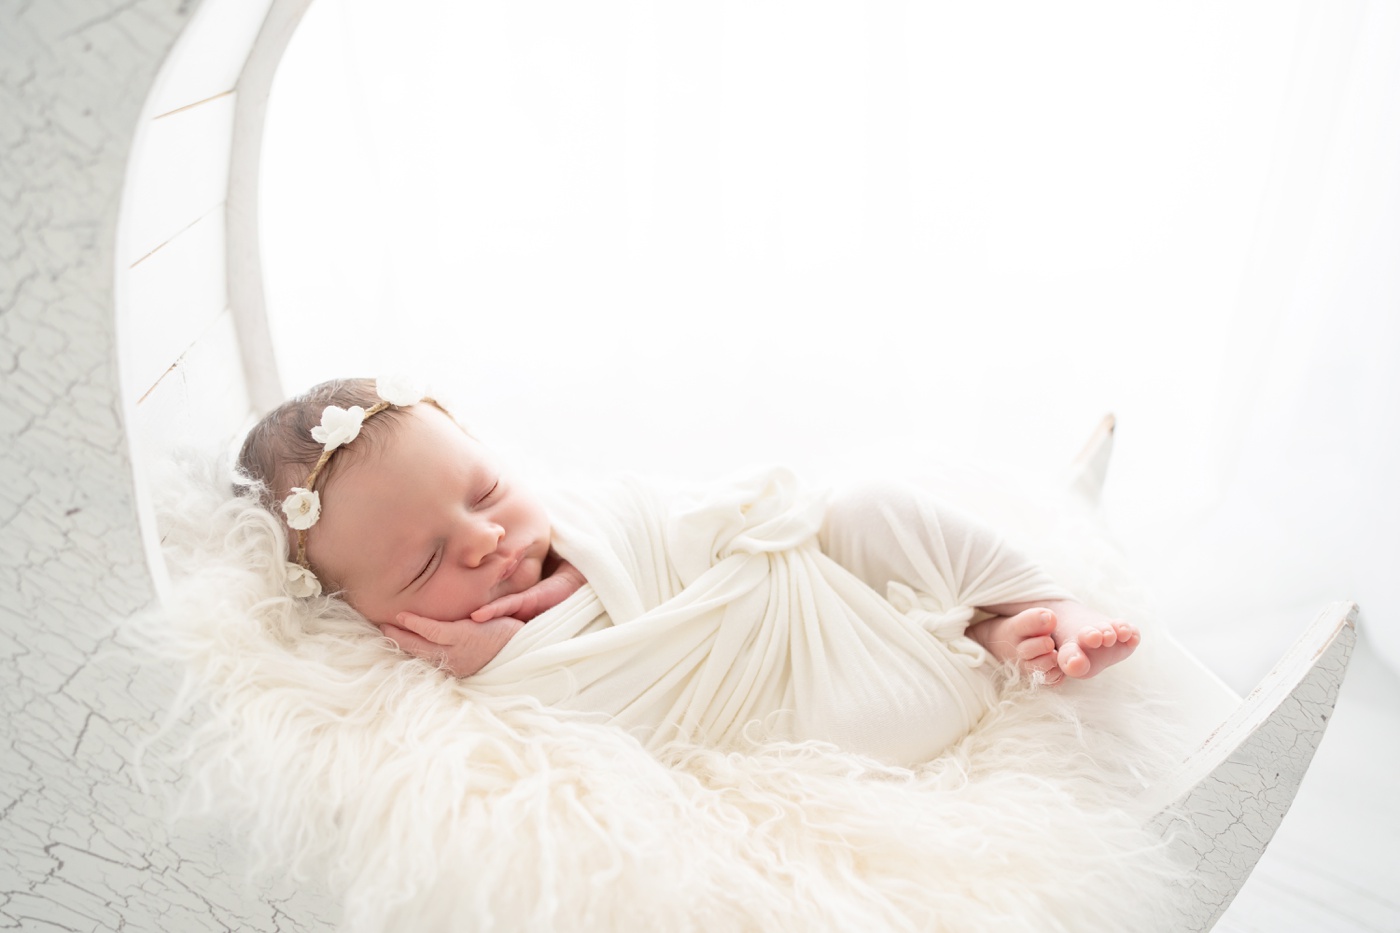  newborn baby in white moon prop in white studio